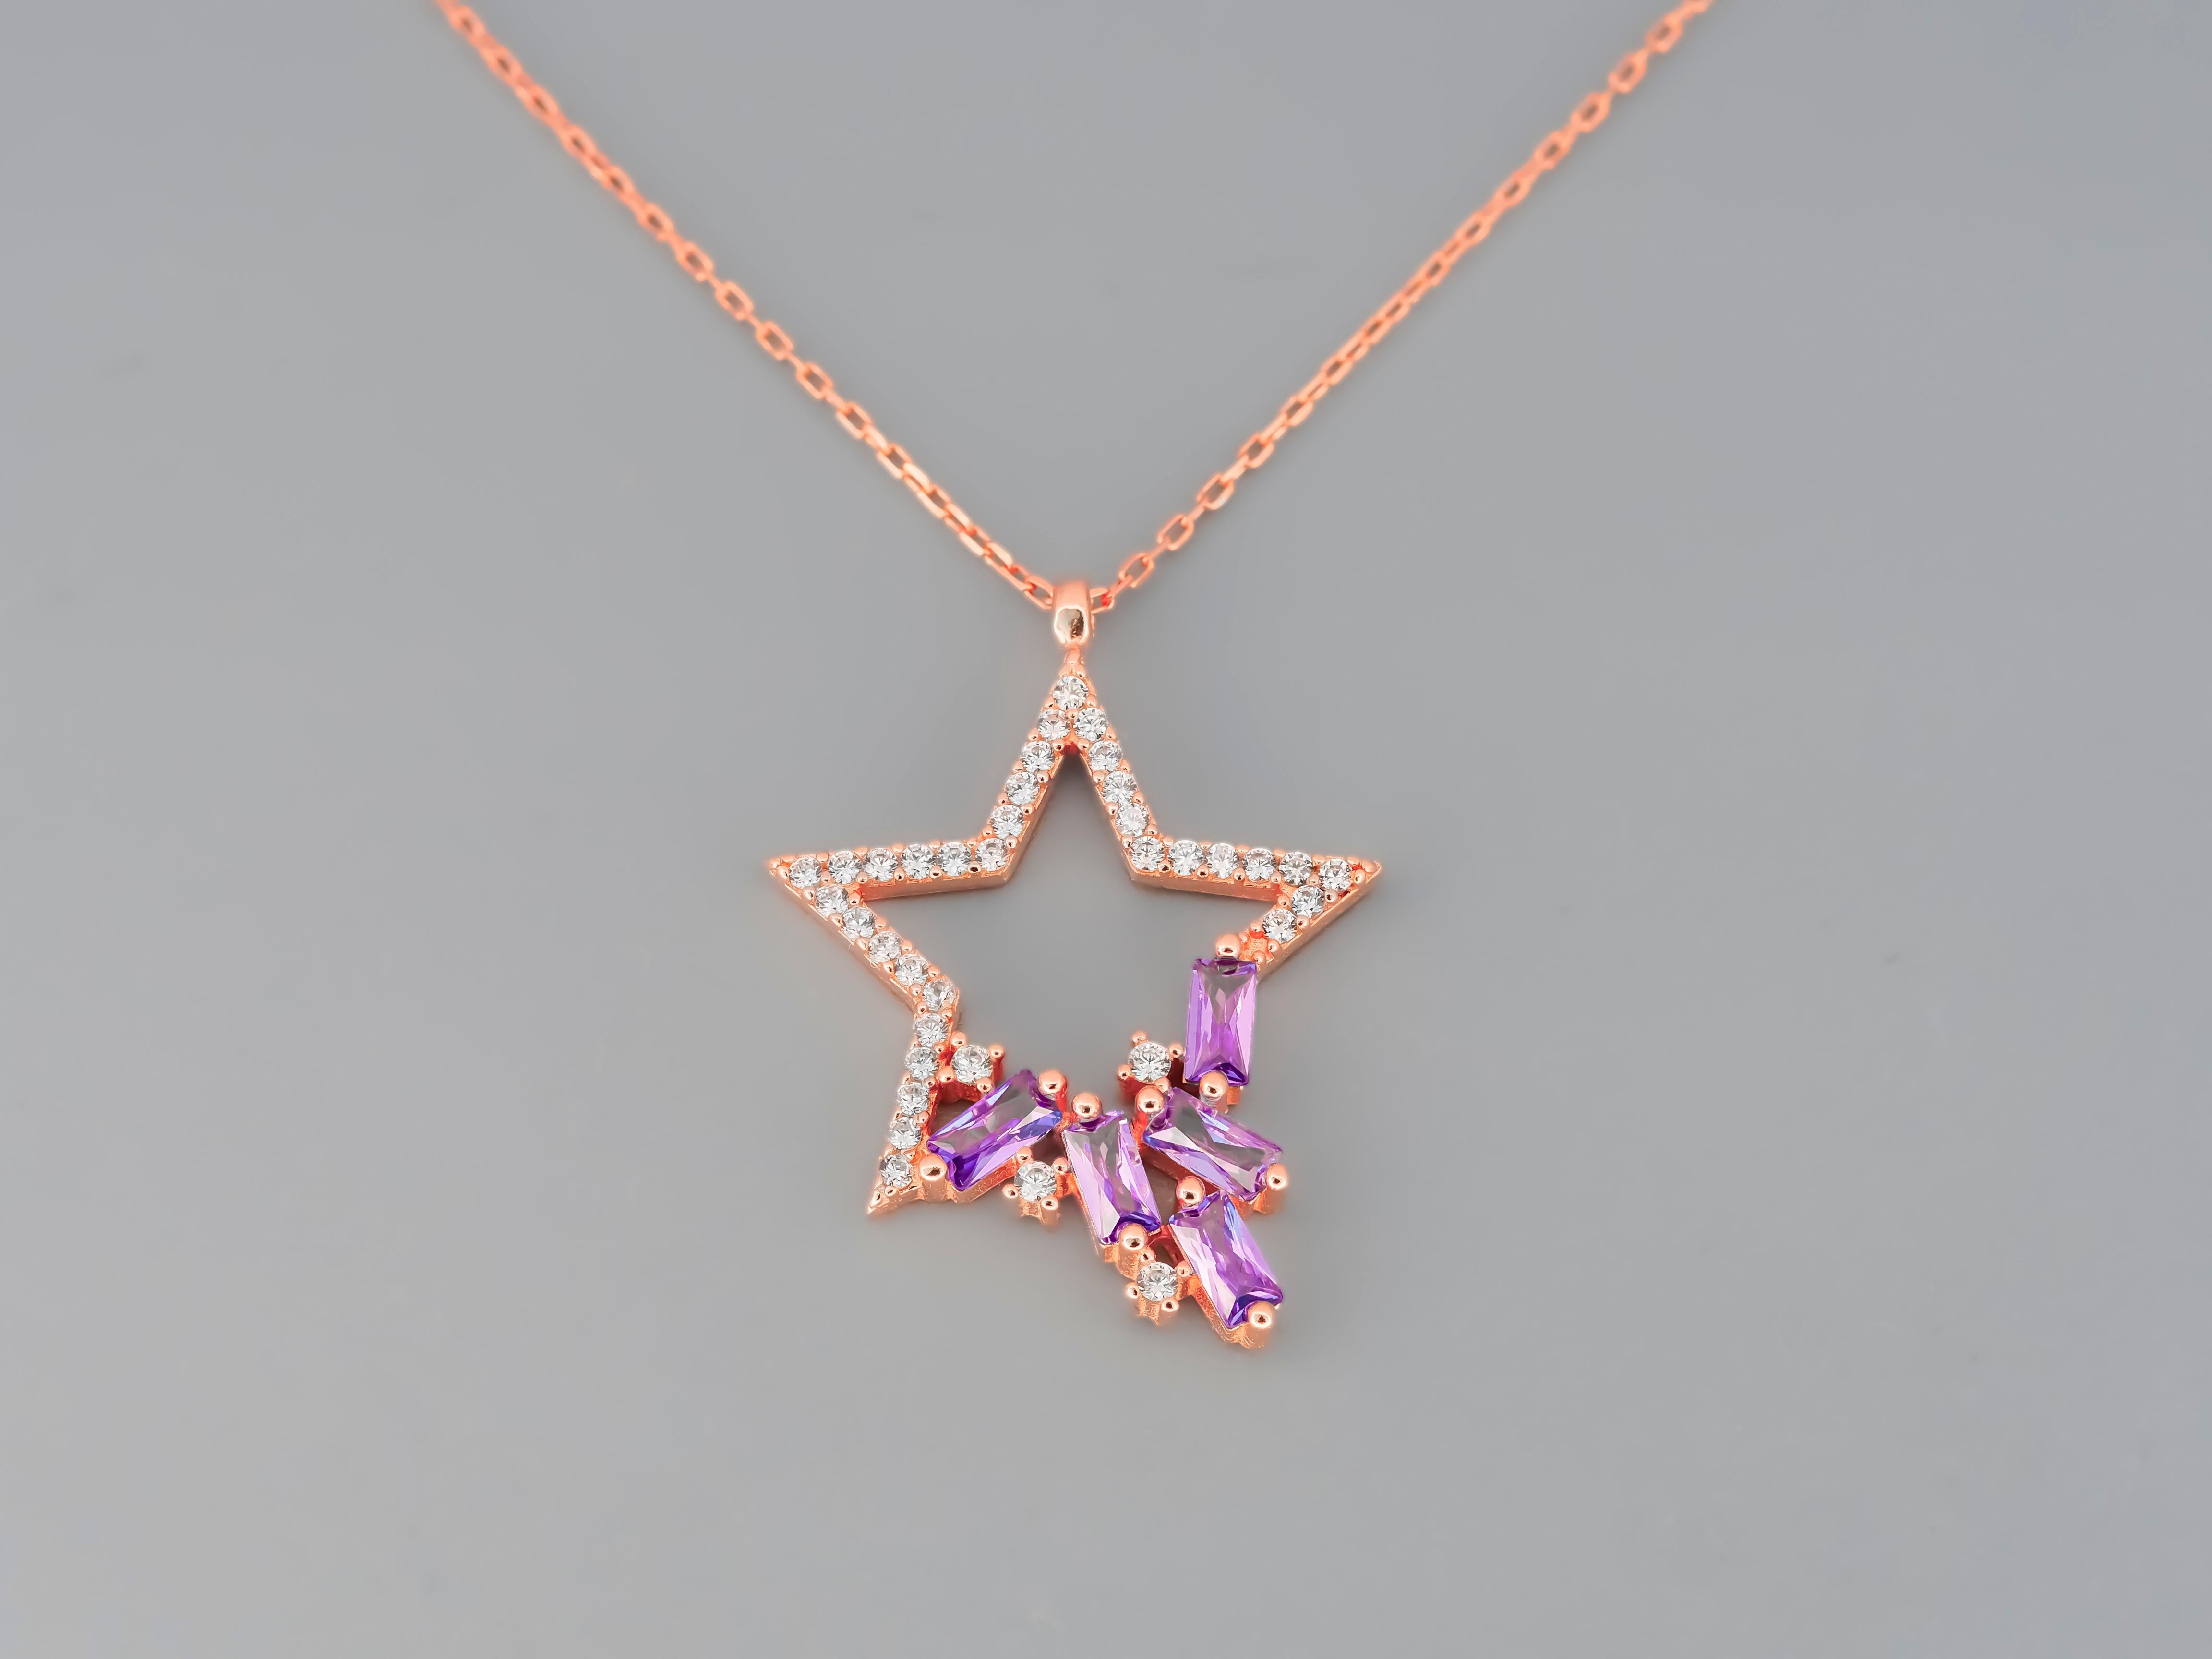 Baguette Cut Star Pendant Necklace with Colored Gemstones, Chain Necklace with Star Pendant